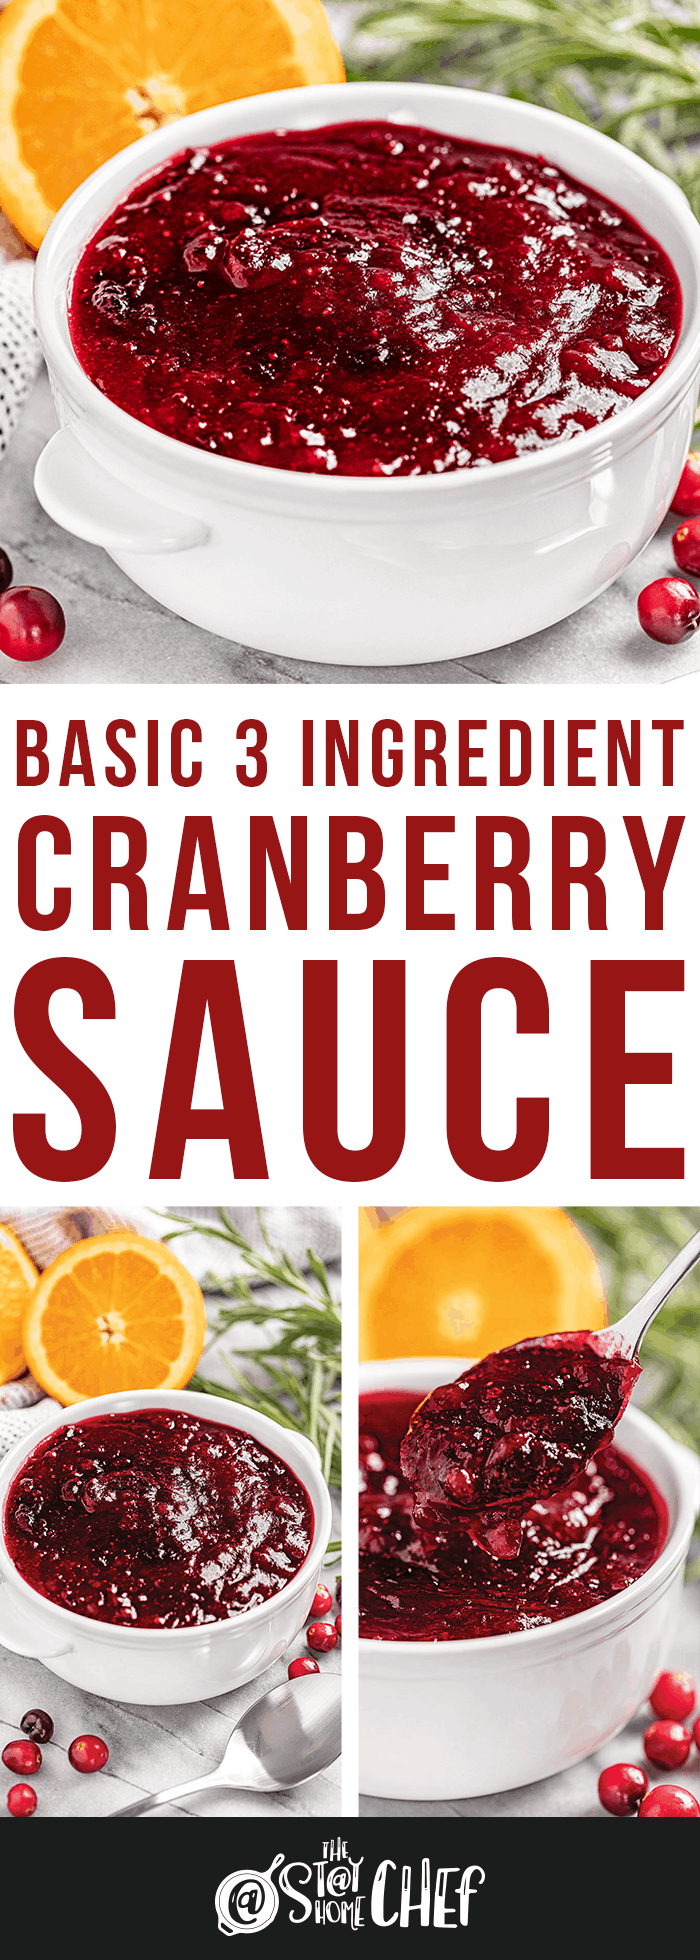 Basic 3 Ingredient Cranberry Sauce (plus 8 variations!)